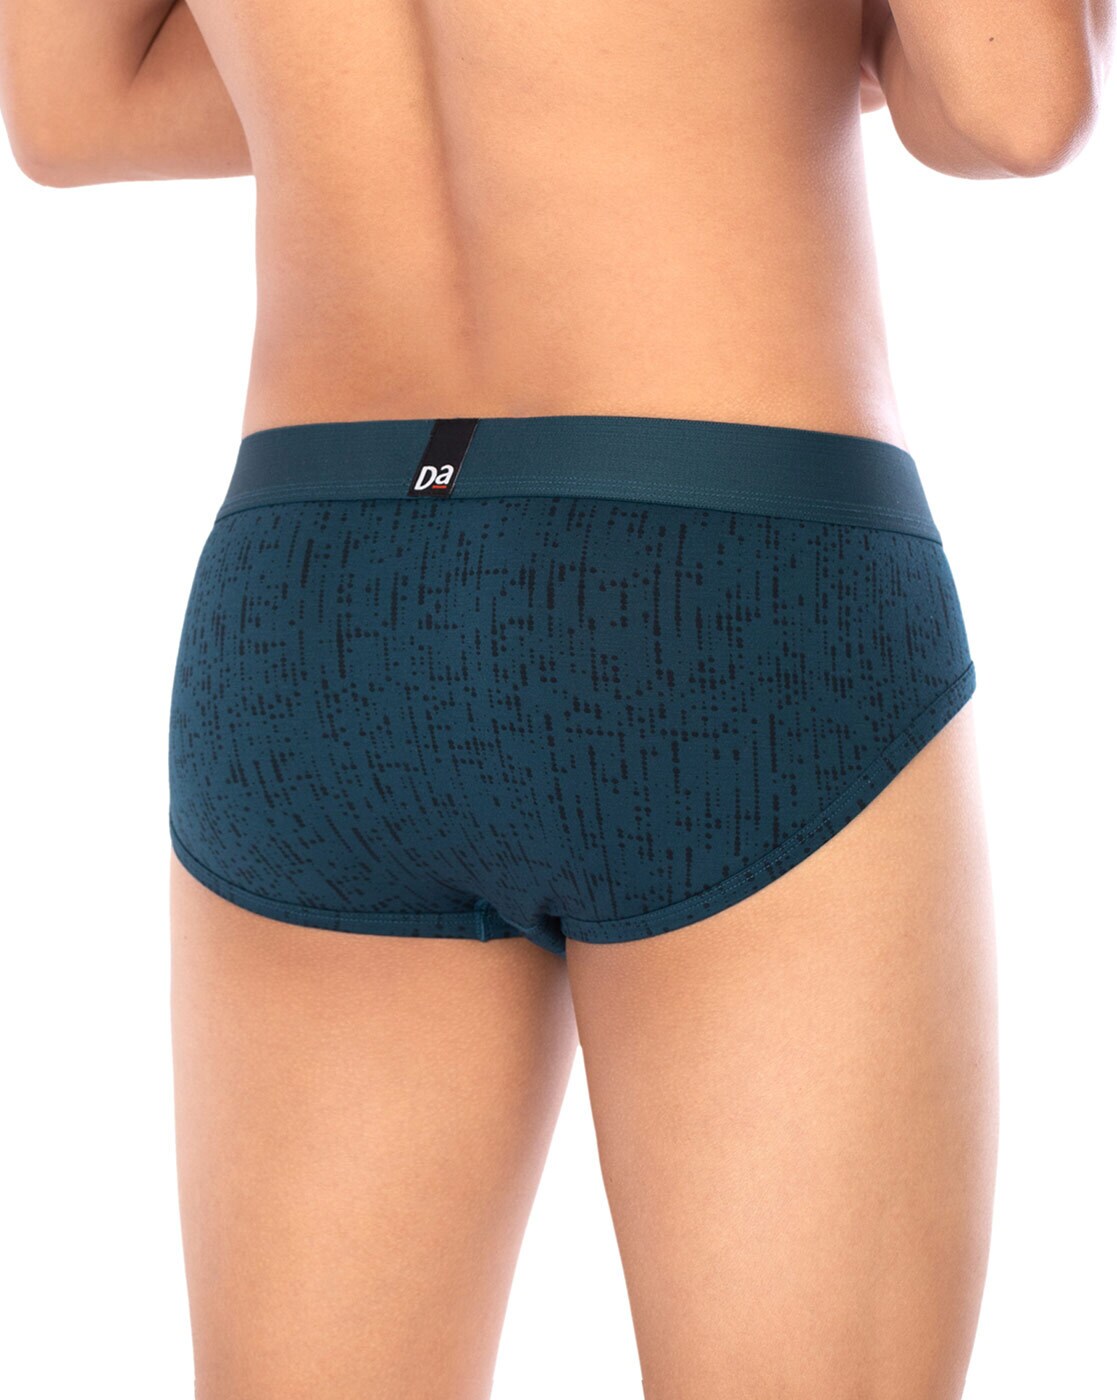 XPSD Men Seamless Underwear Pants Boxer Shorts Male India